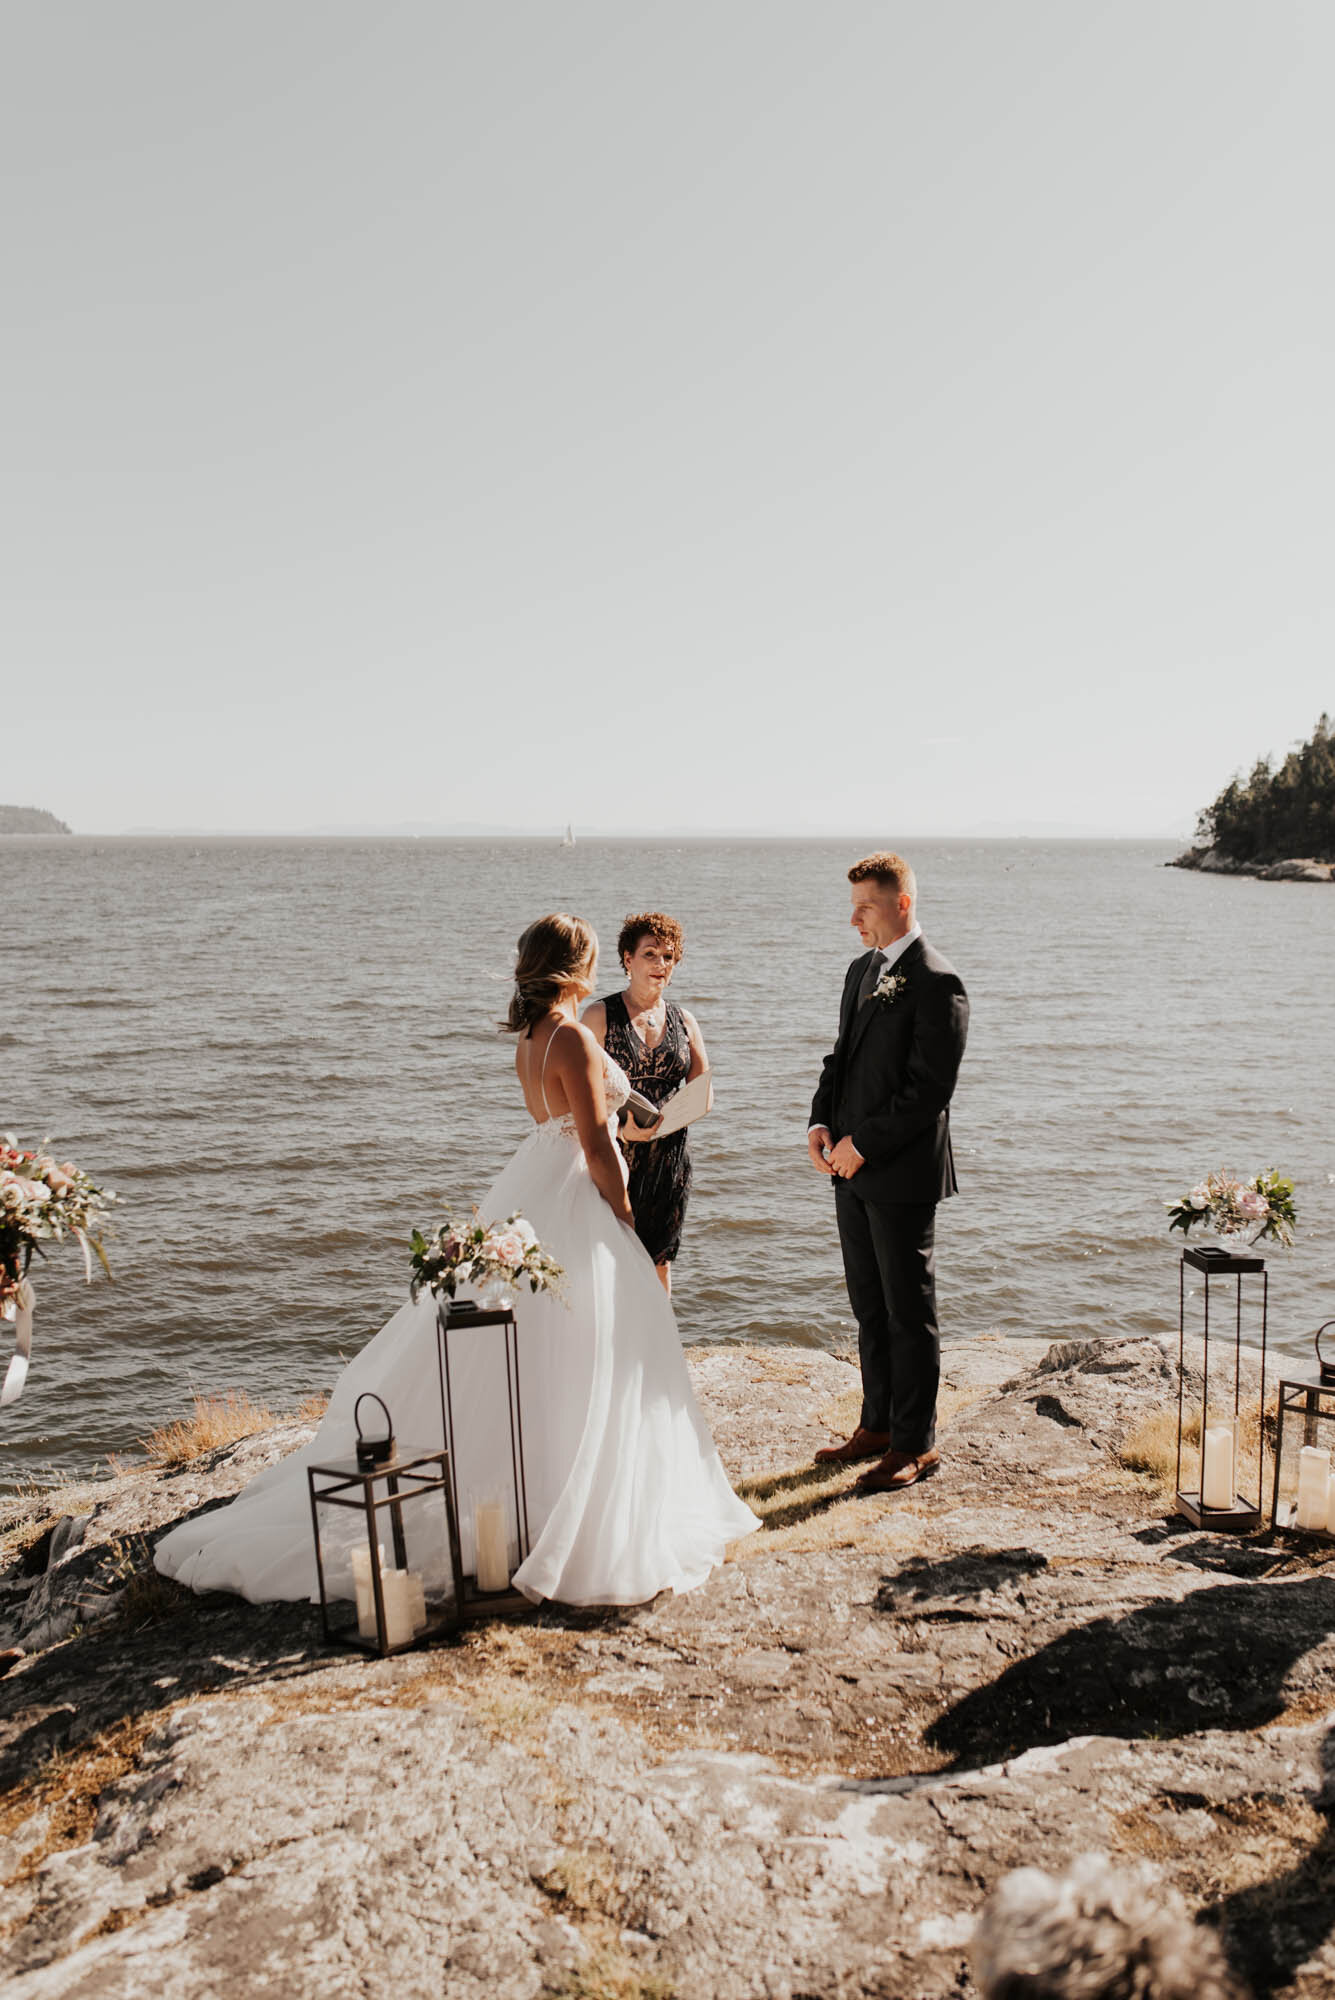 Kate-Paterson-Photography-North-Vancouver-Beach-Wedding-Kelsey+Josh-103 - Copy.jpg